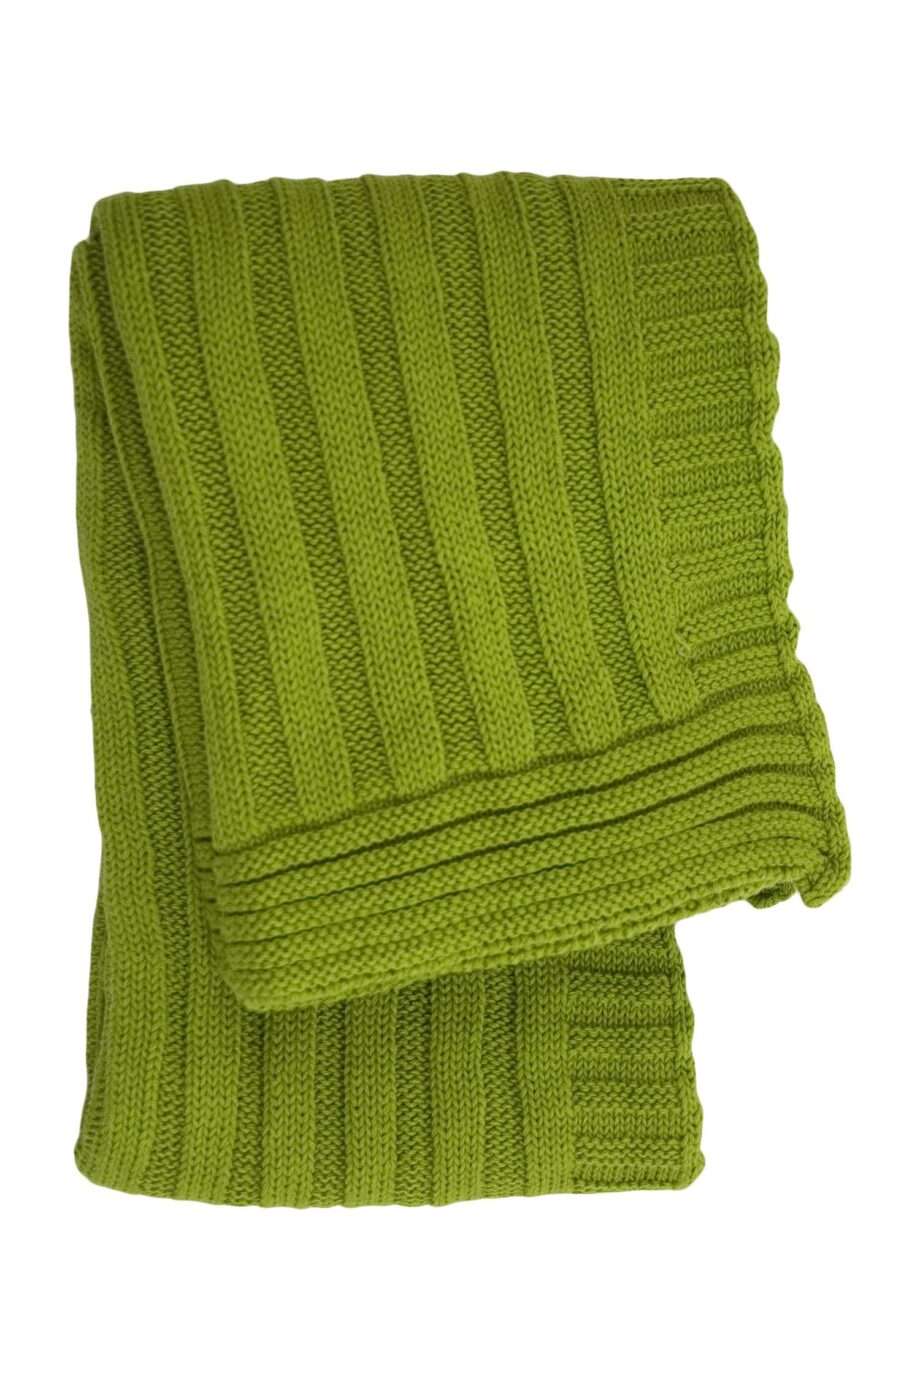 ribs  knitted cotton little blanket medium